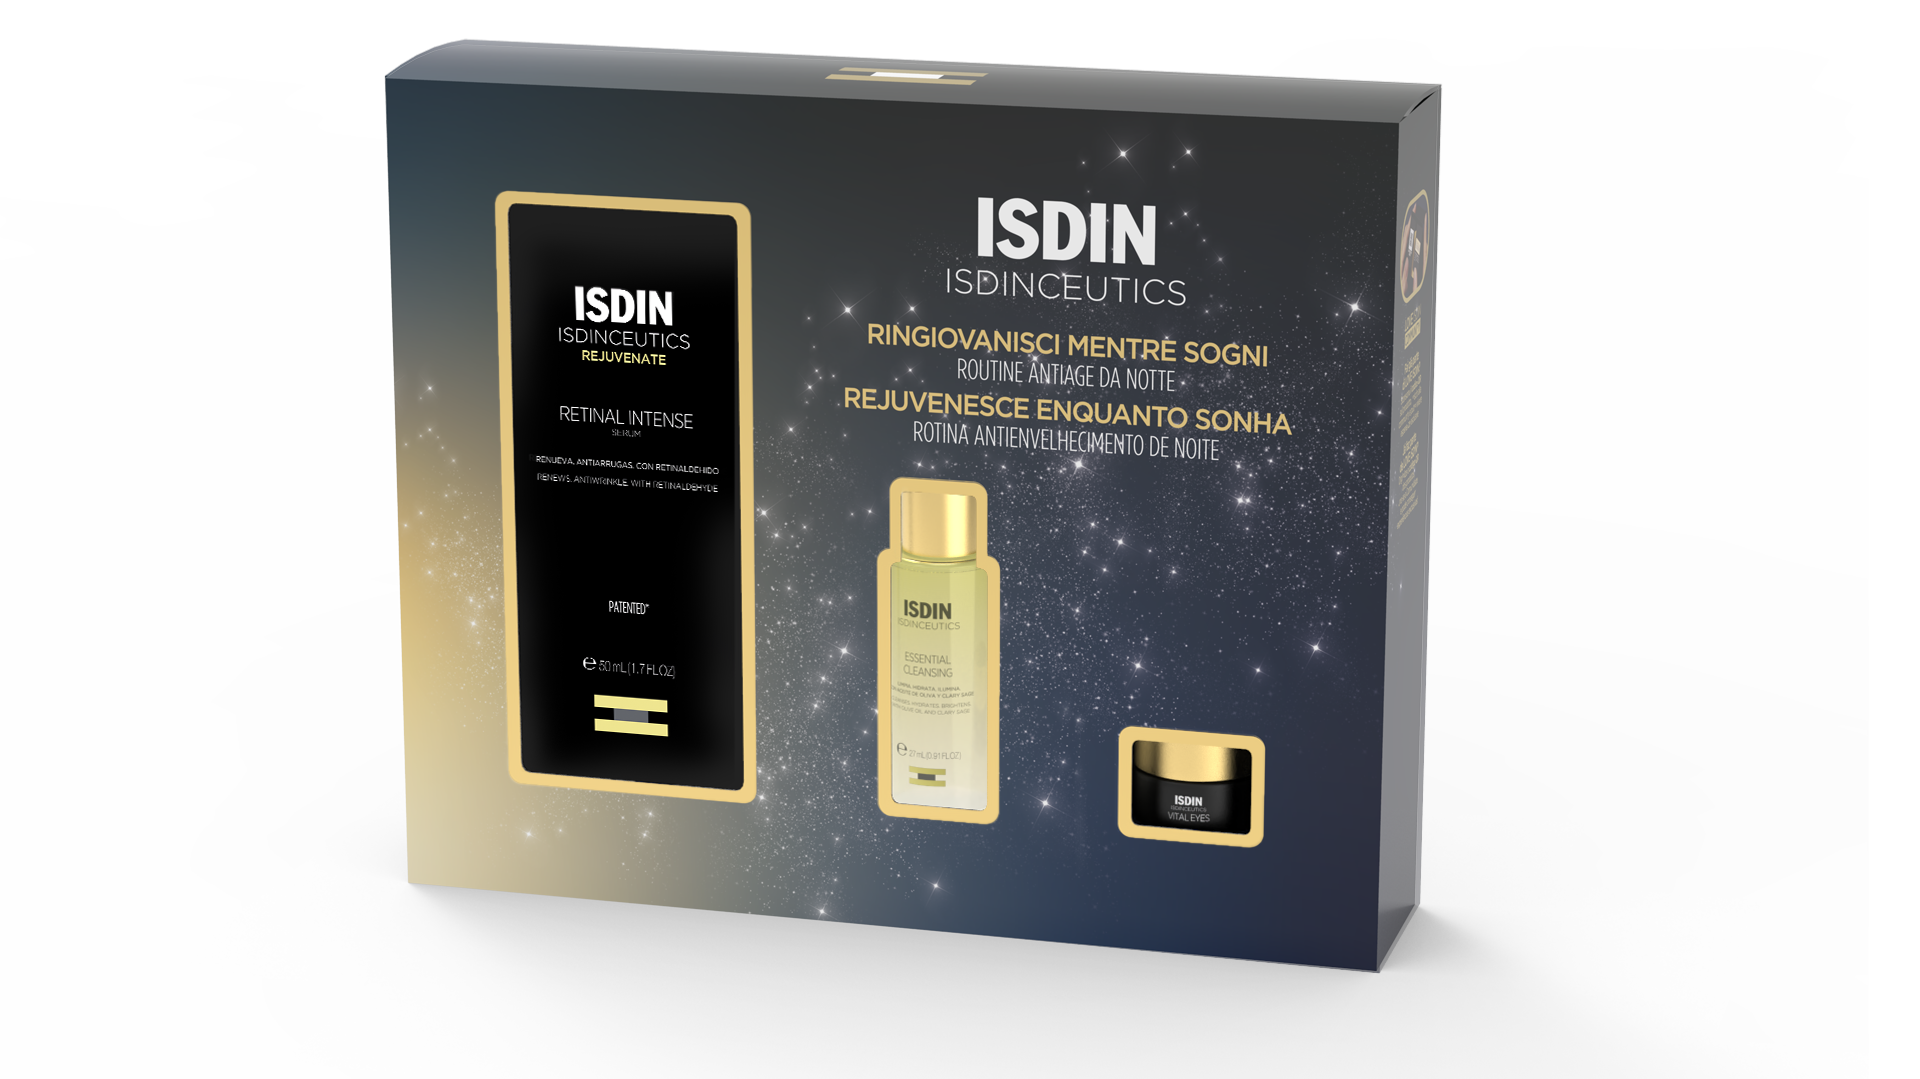 ISDIN Isdinceutics Retinal Intense 50ml Coffret 
